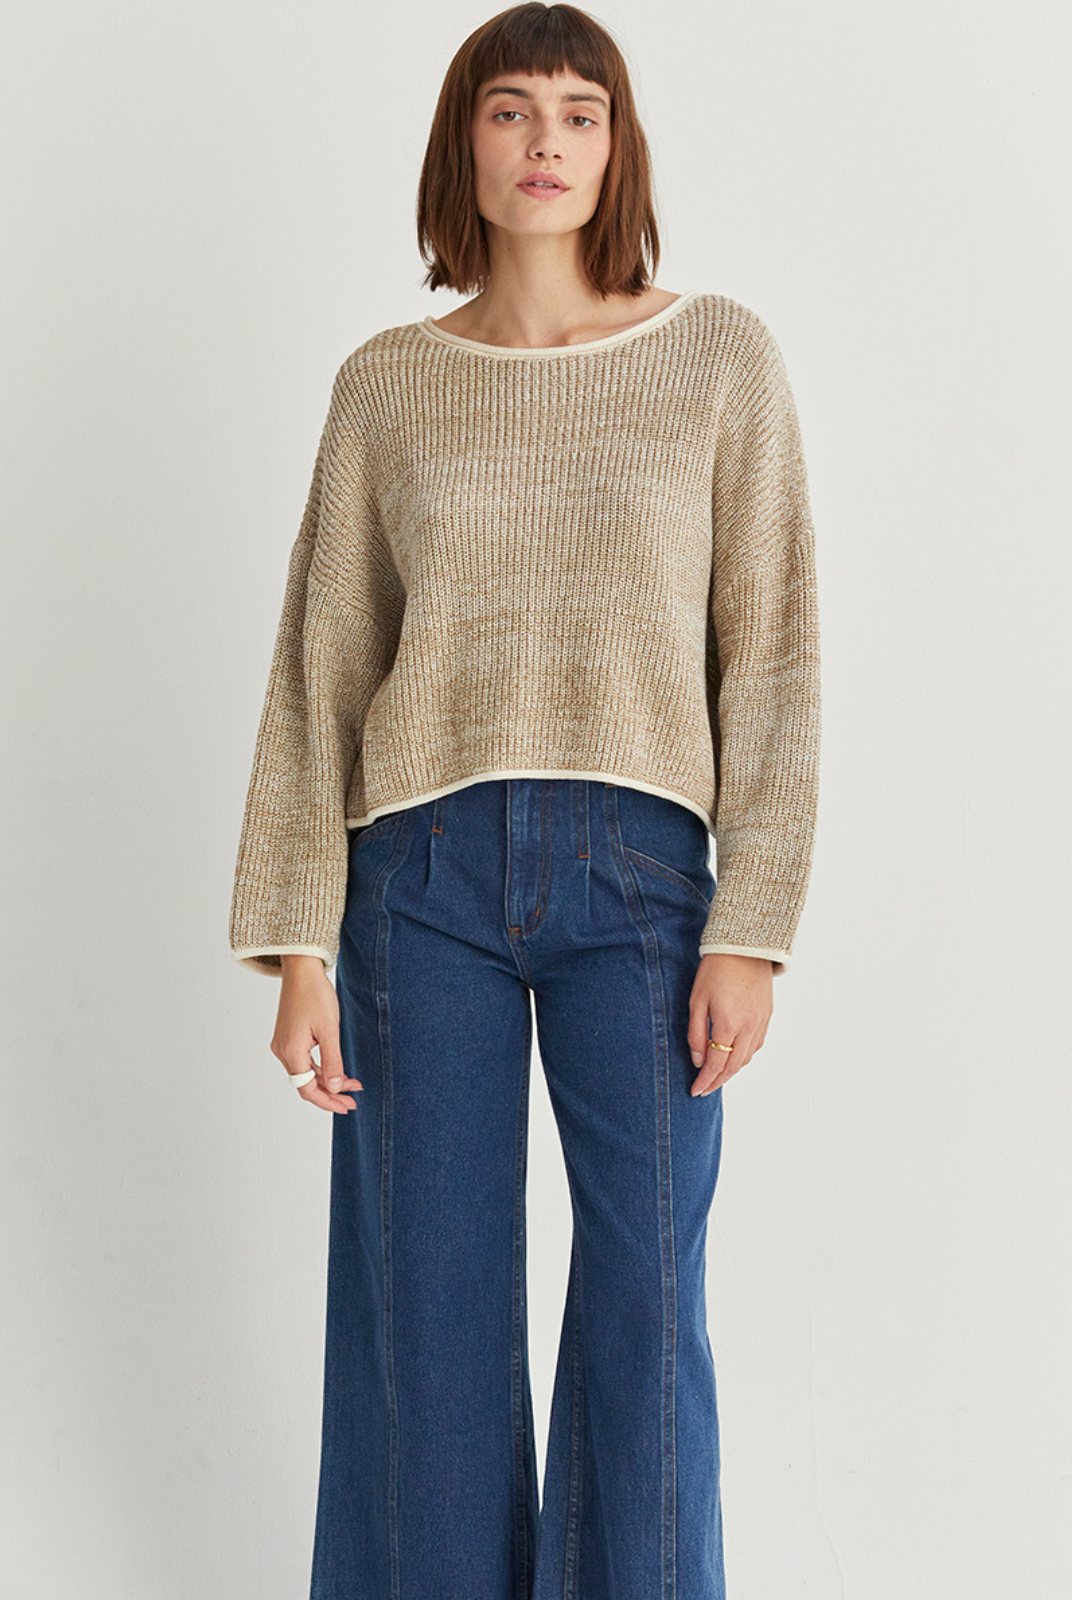 Crescent Sweater